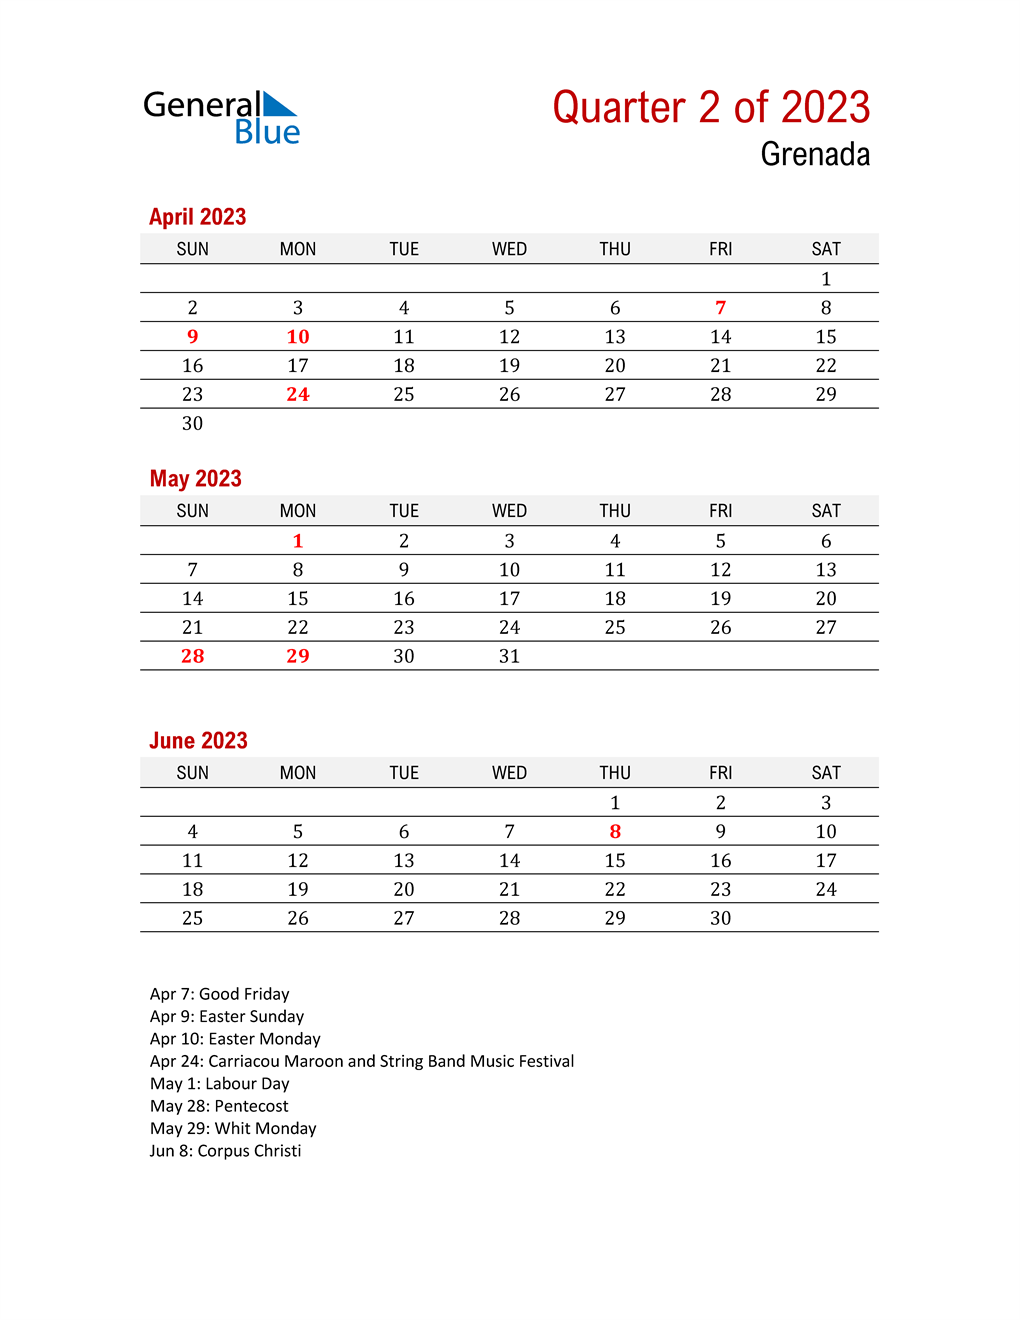  Printable Three Month Calendar for Grenada